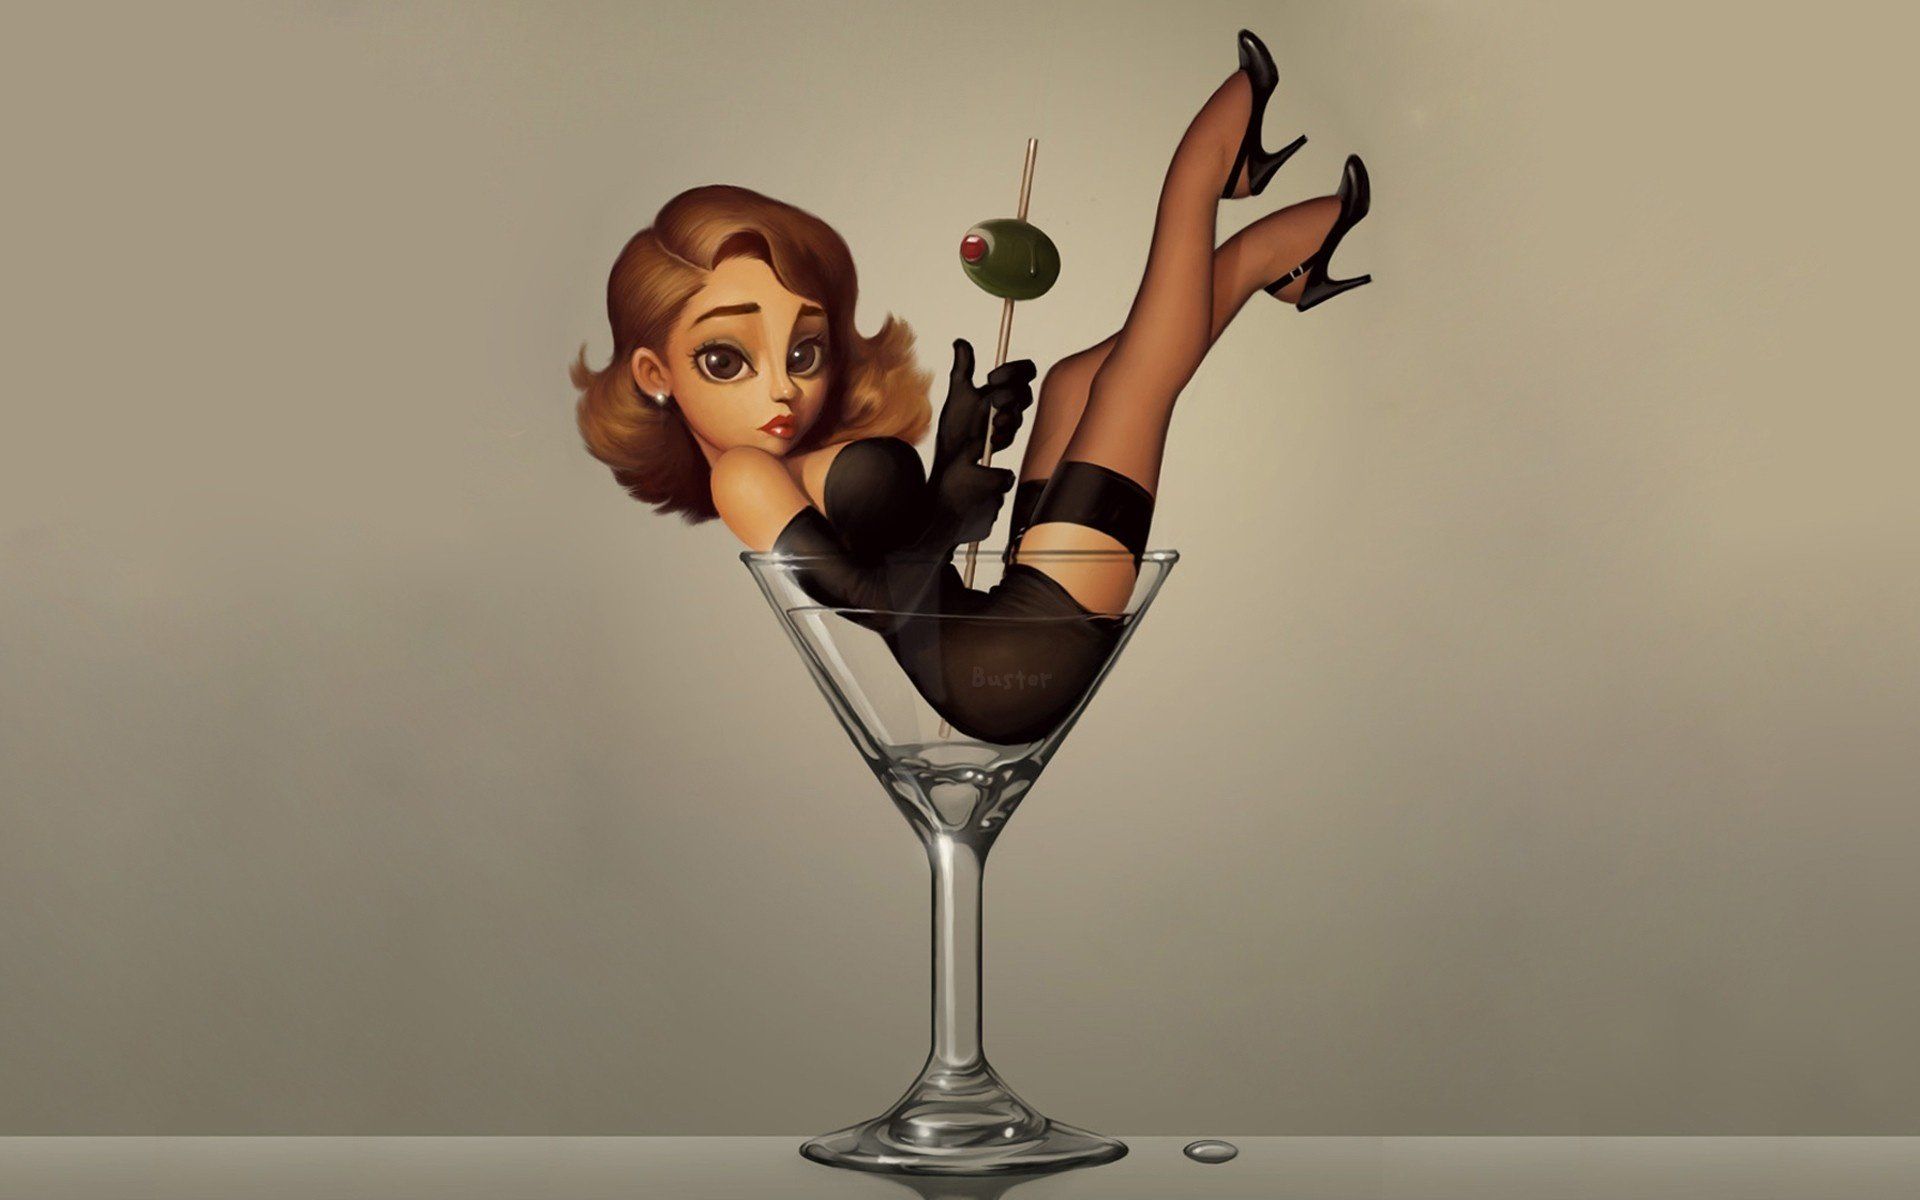 Thumbelina Alcohol babe legs drink cartoon wallpaper